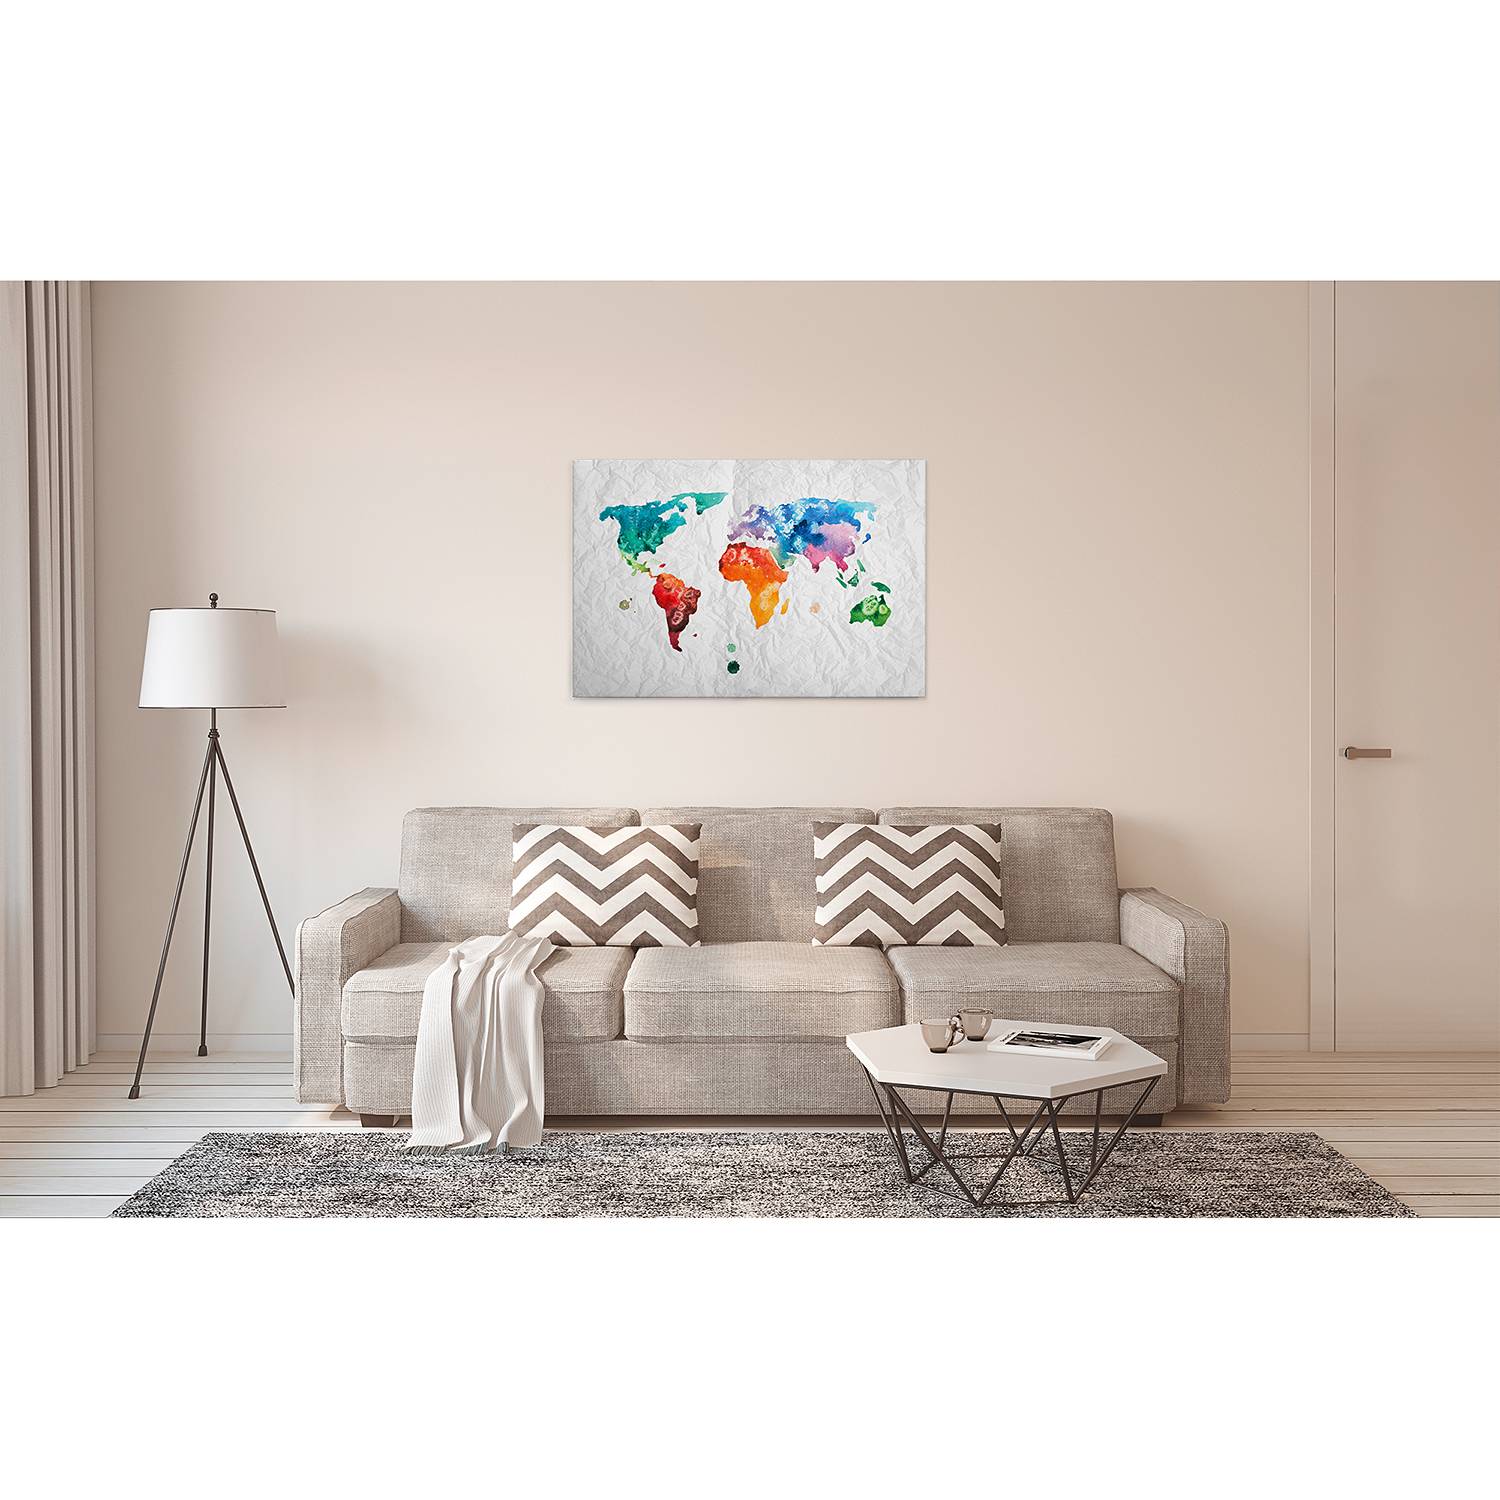 Wandbild Weltkarte Colourful World von A.S. Création